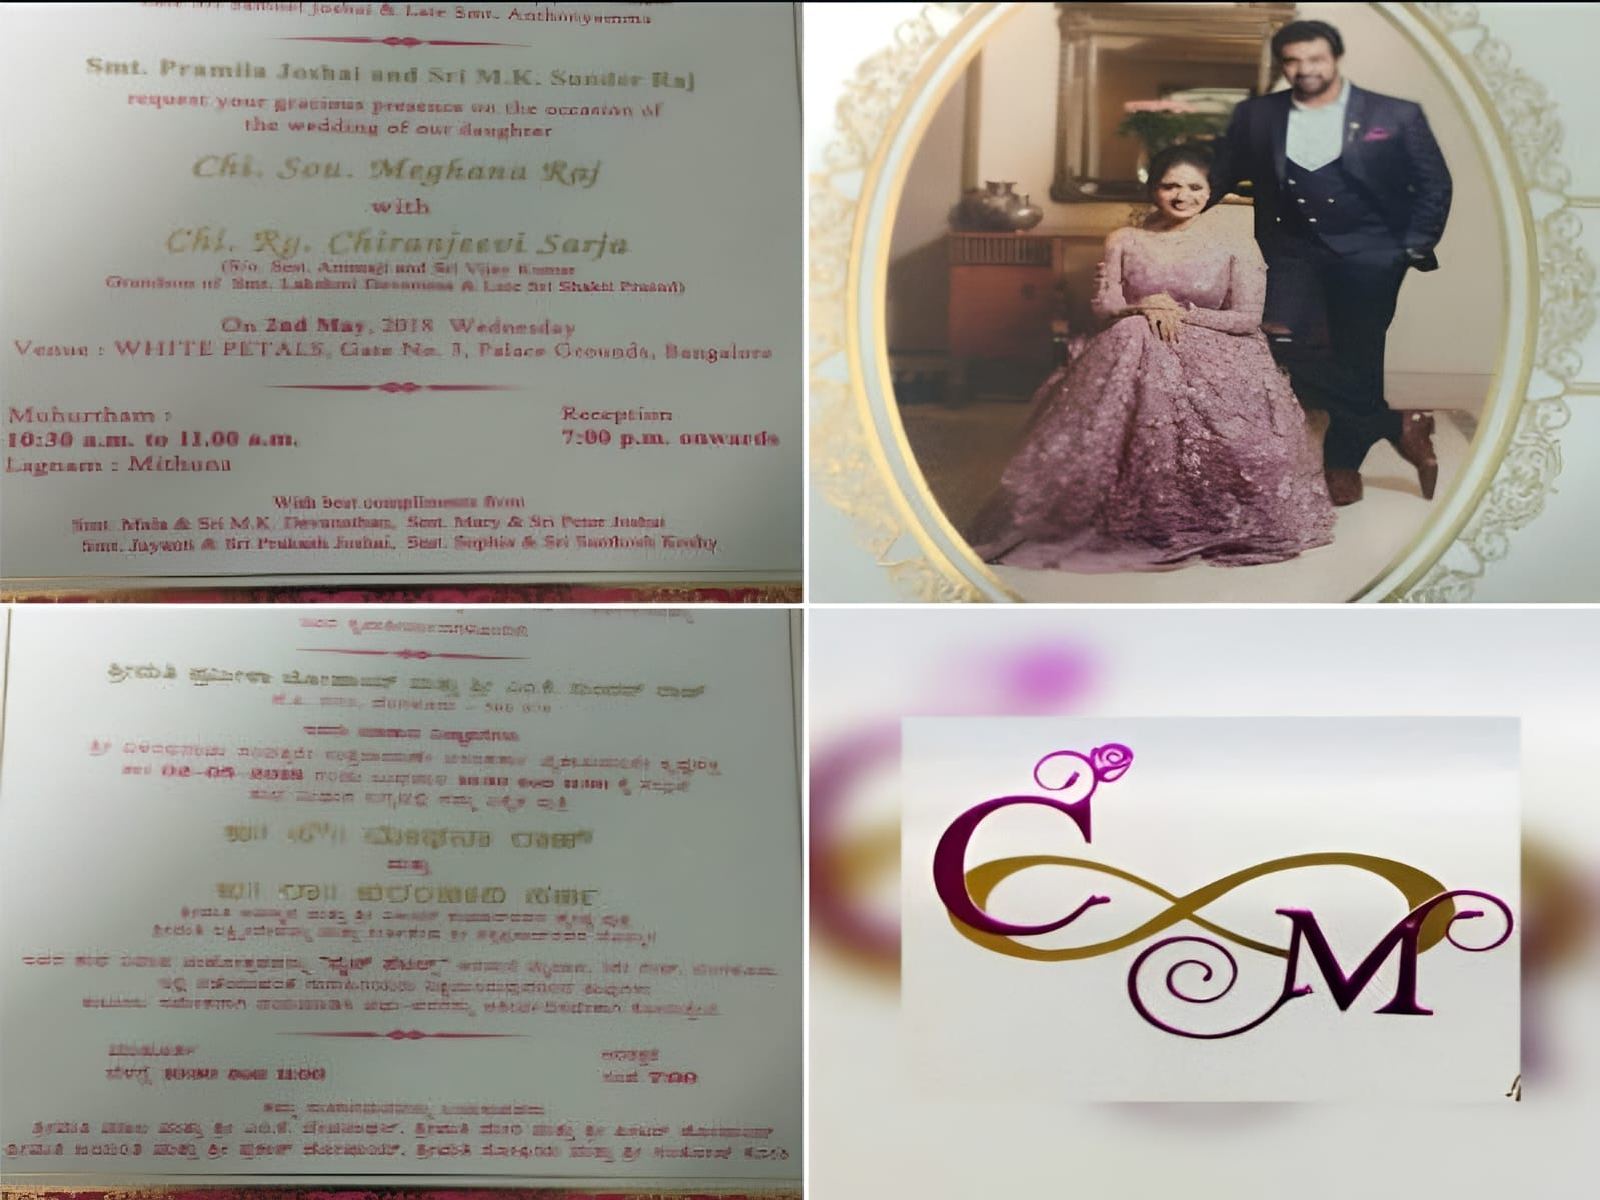 Chiru Meghana Wedding Card